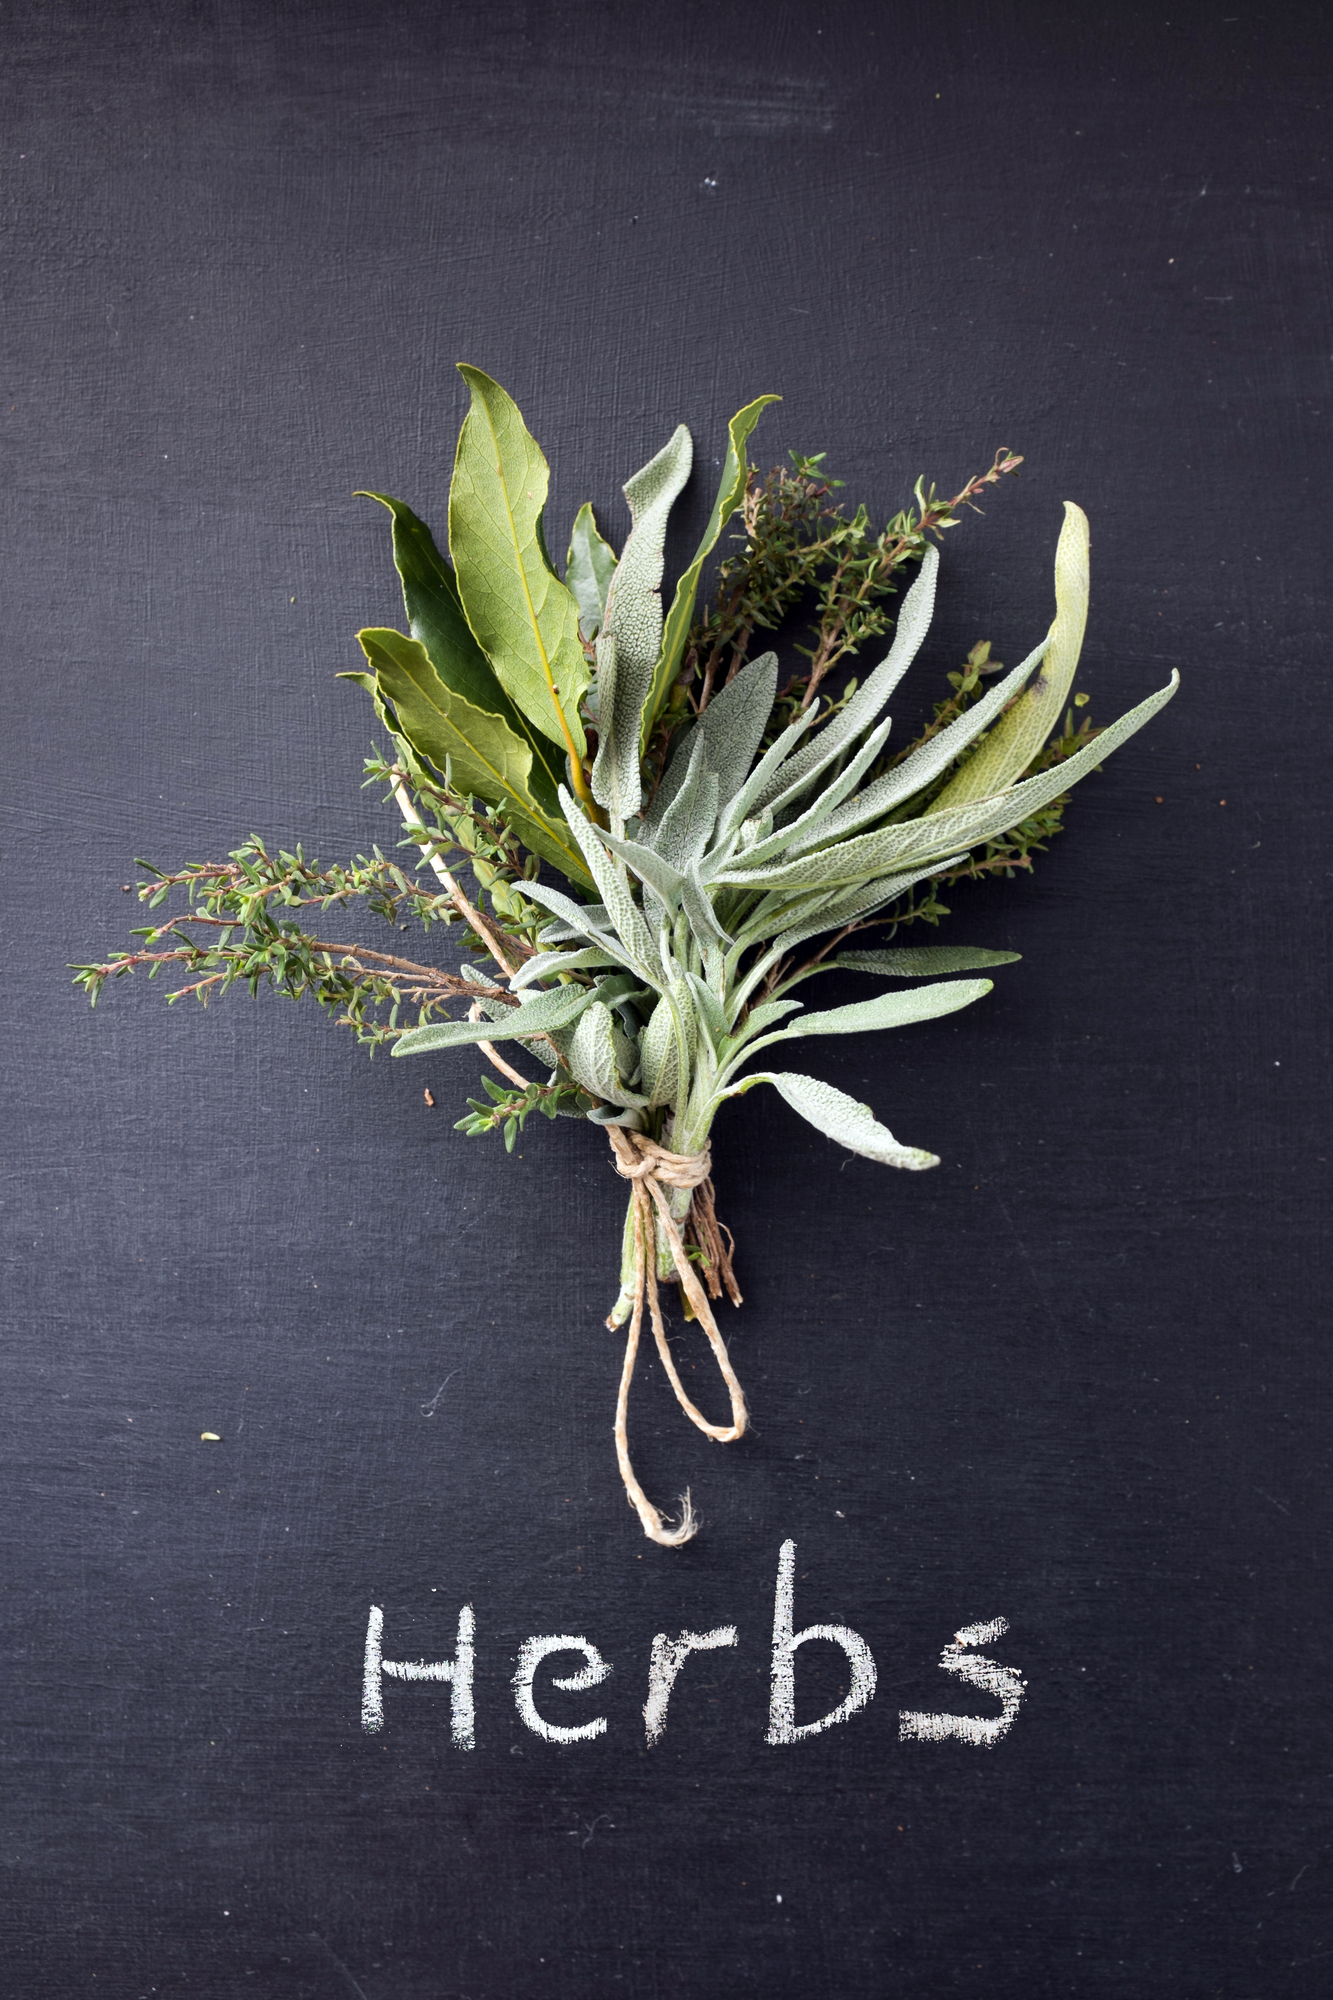 Tied fresh herbs on blackboard